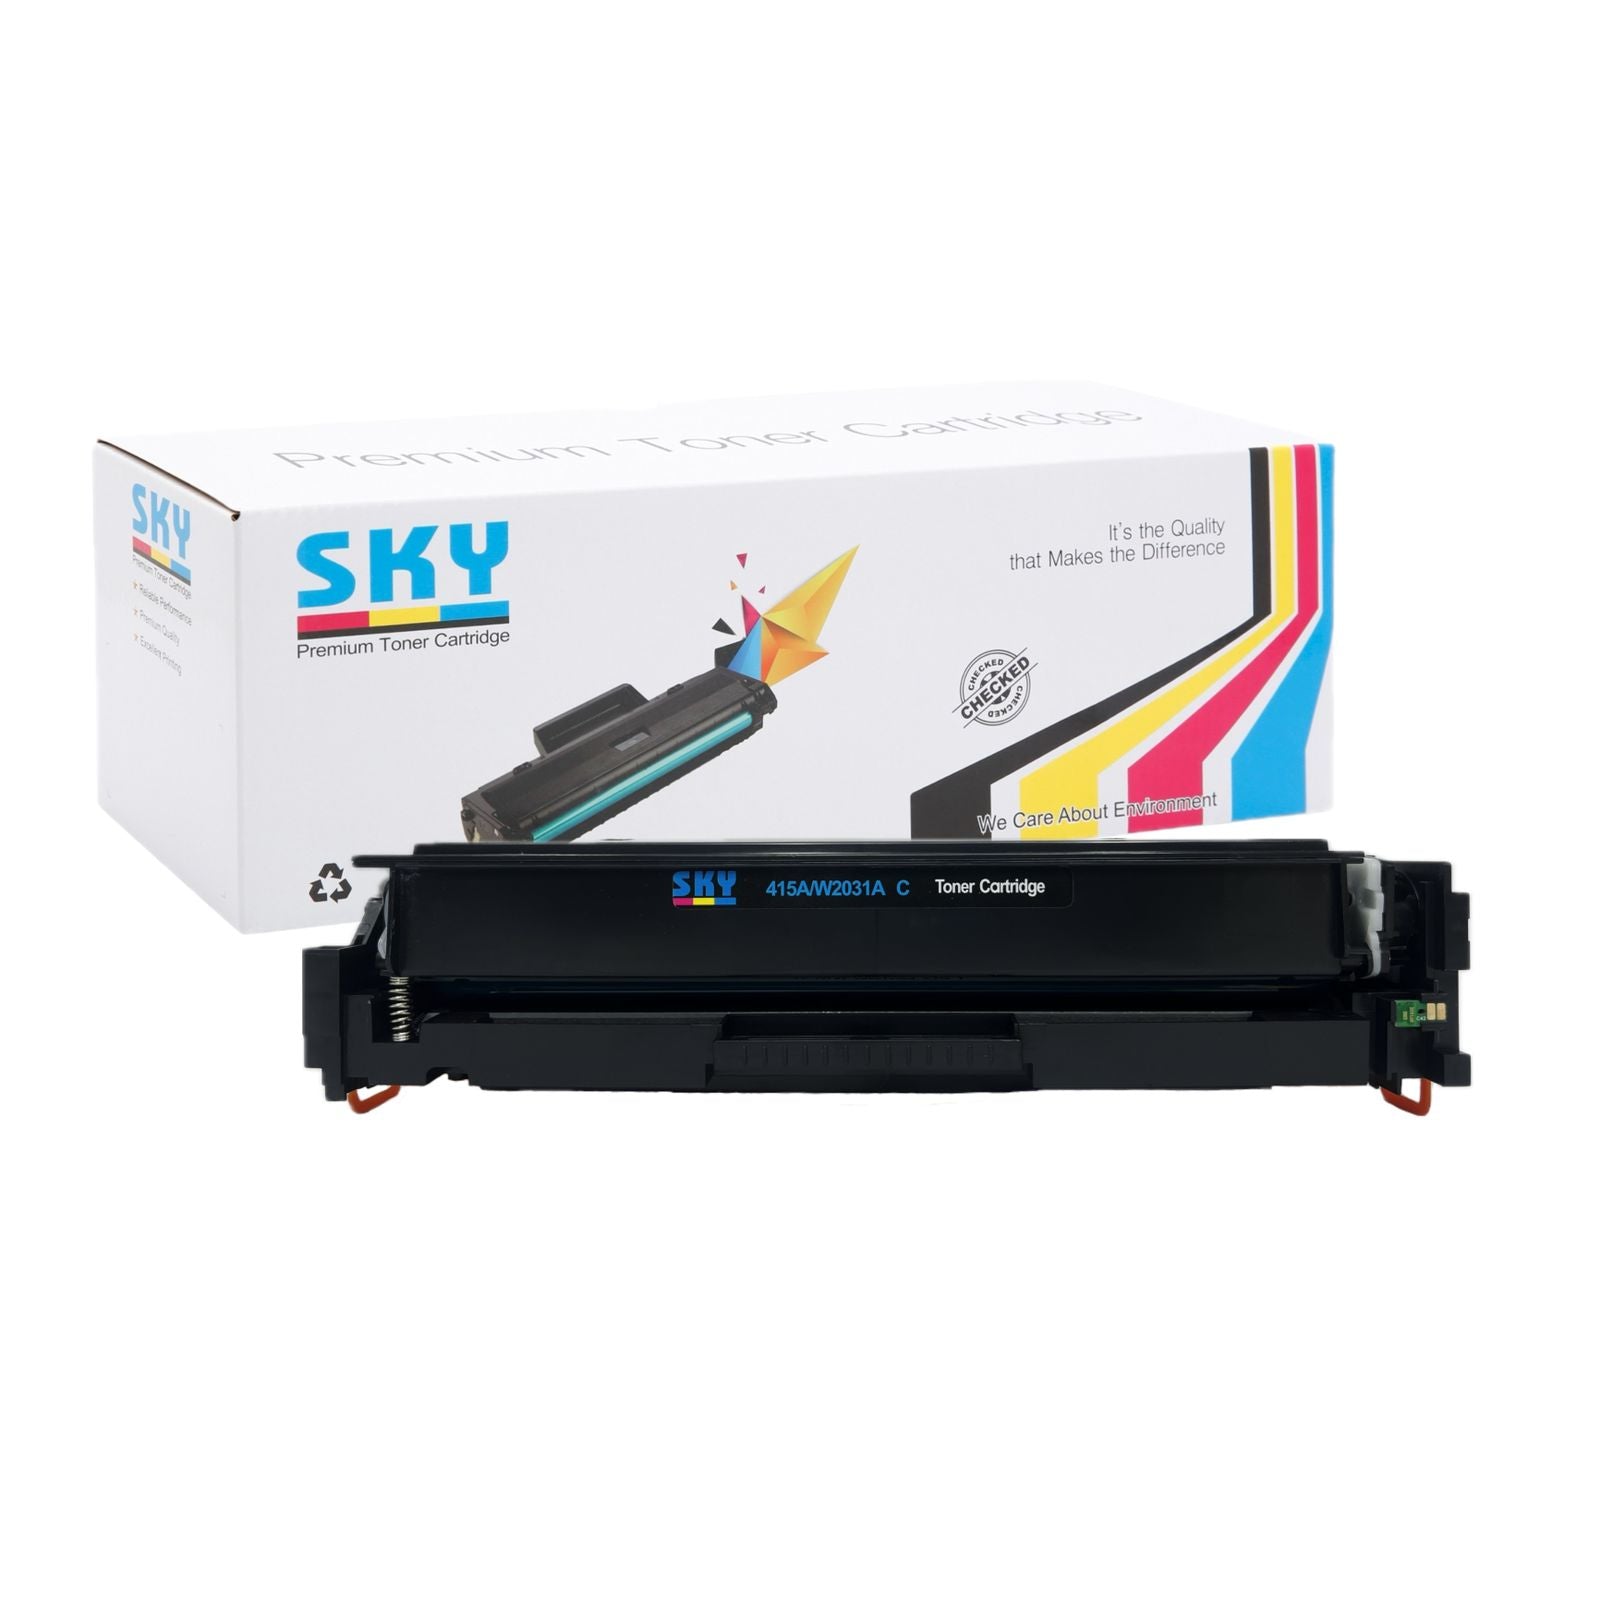 SKY 415A with  Chip compatible Toner Cartridges for  HP Color LaserJet Pro M454 MFP M479